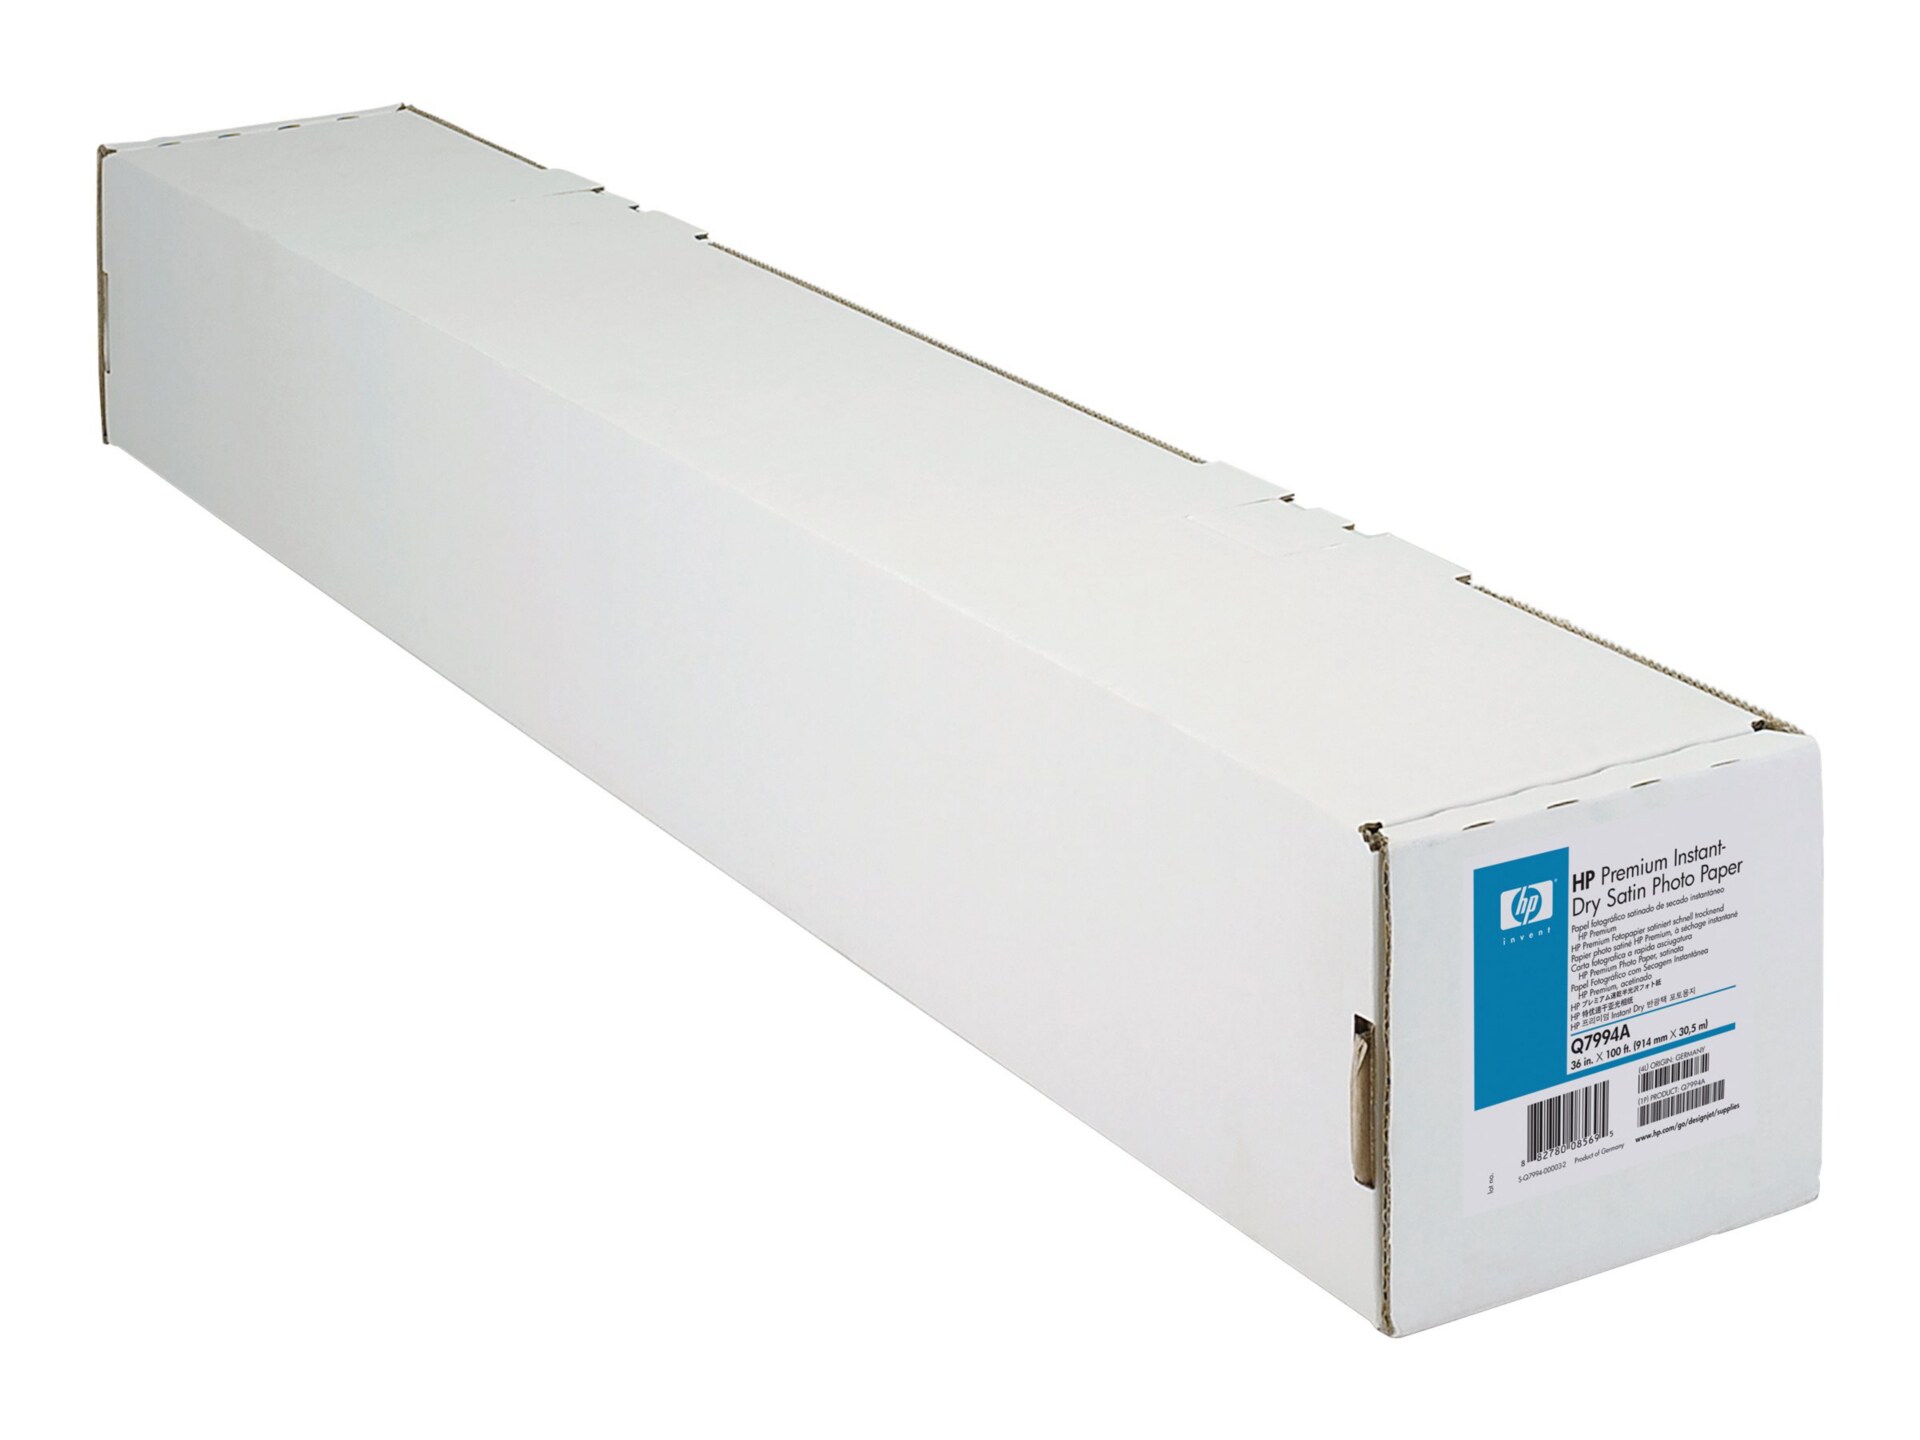 HP Premium Instant-dry Satin Photo Paper - photo paper - 1 roll(s) - Roll (152.4 cm x 30.5 m) - 260 g/m²